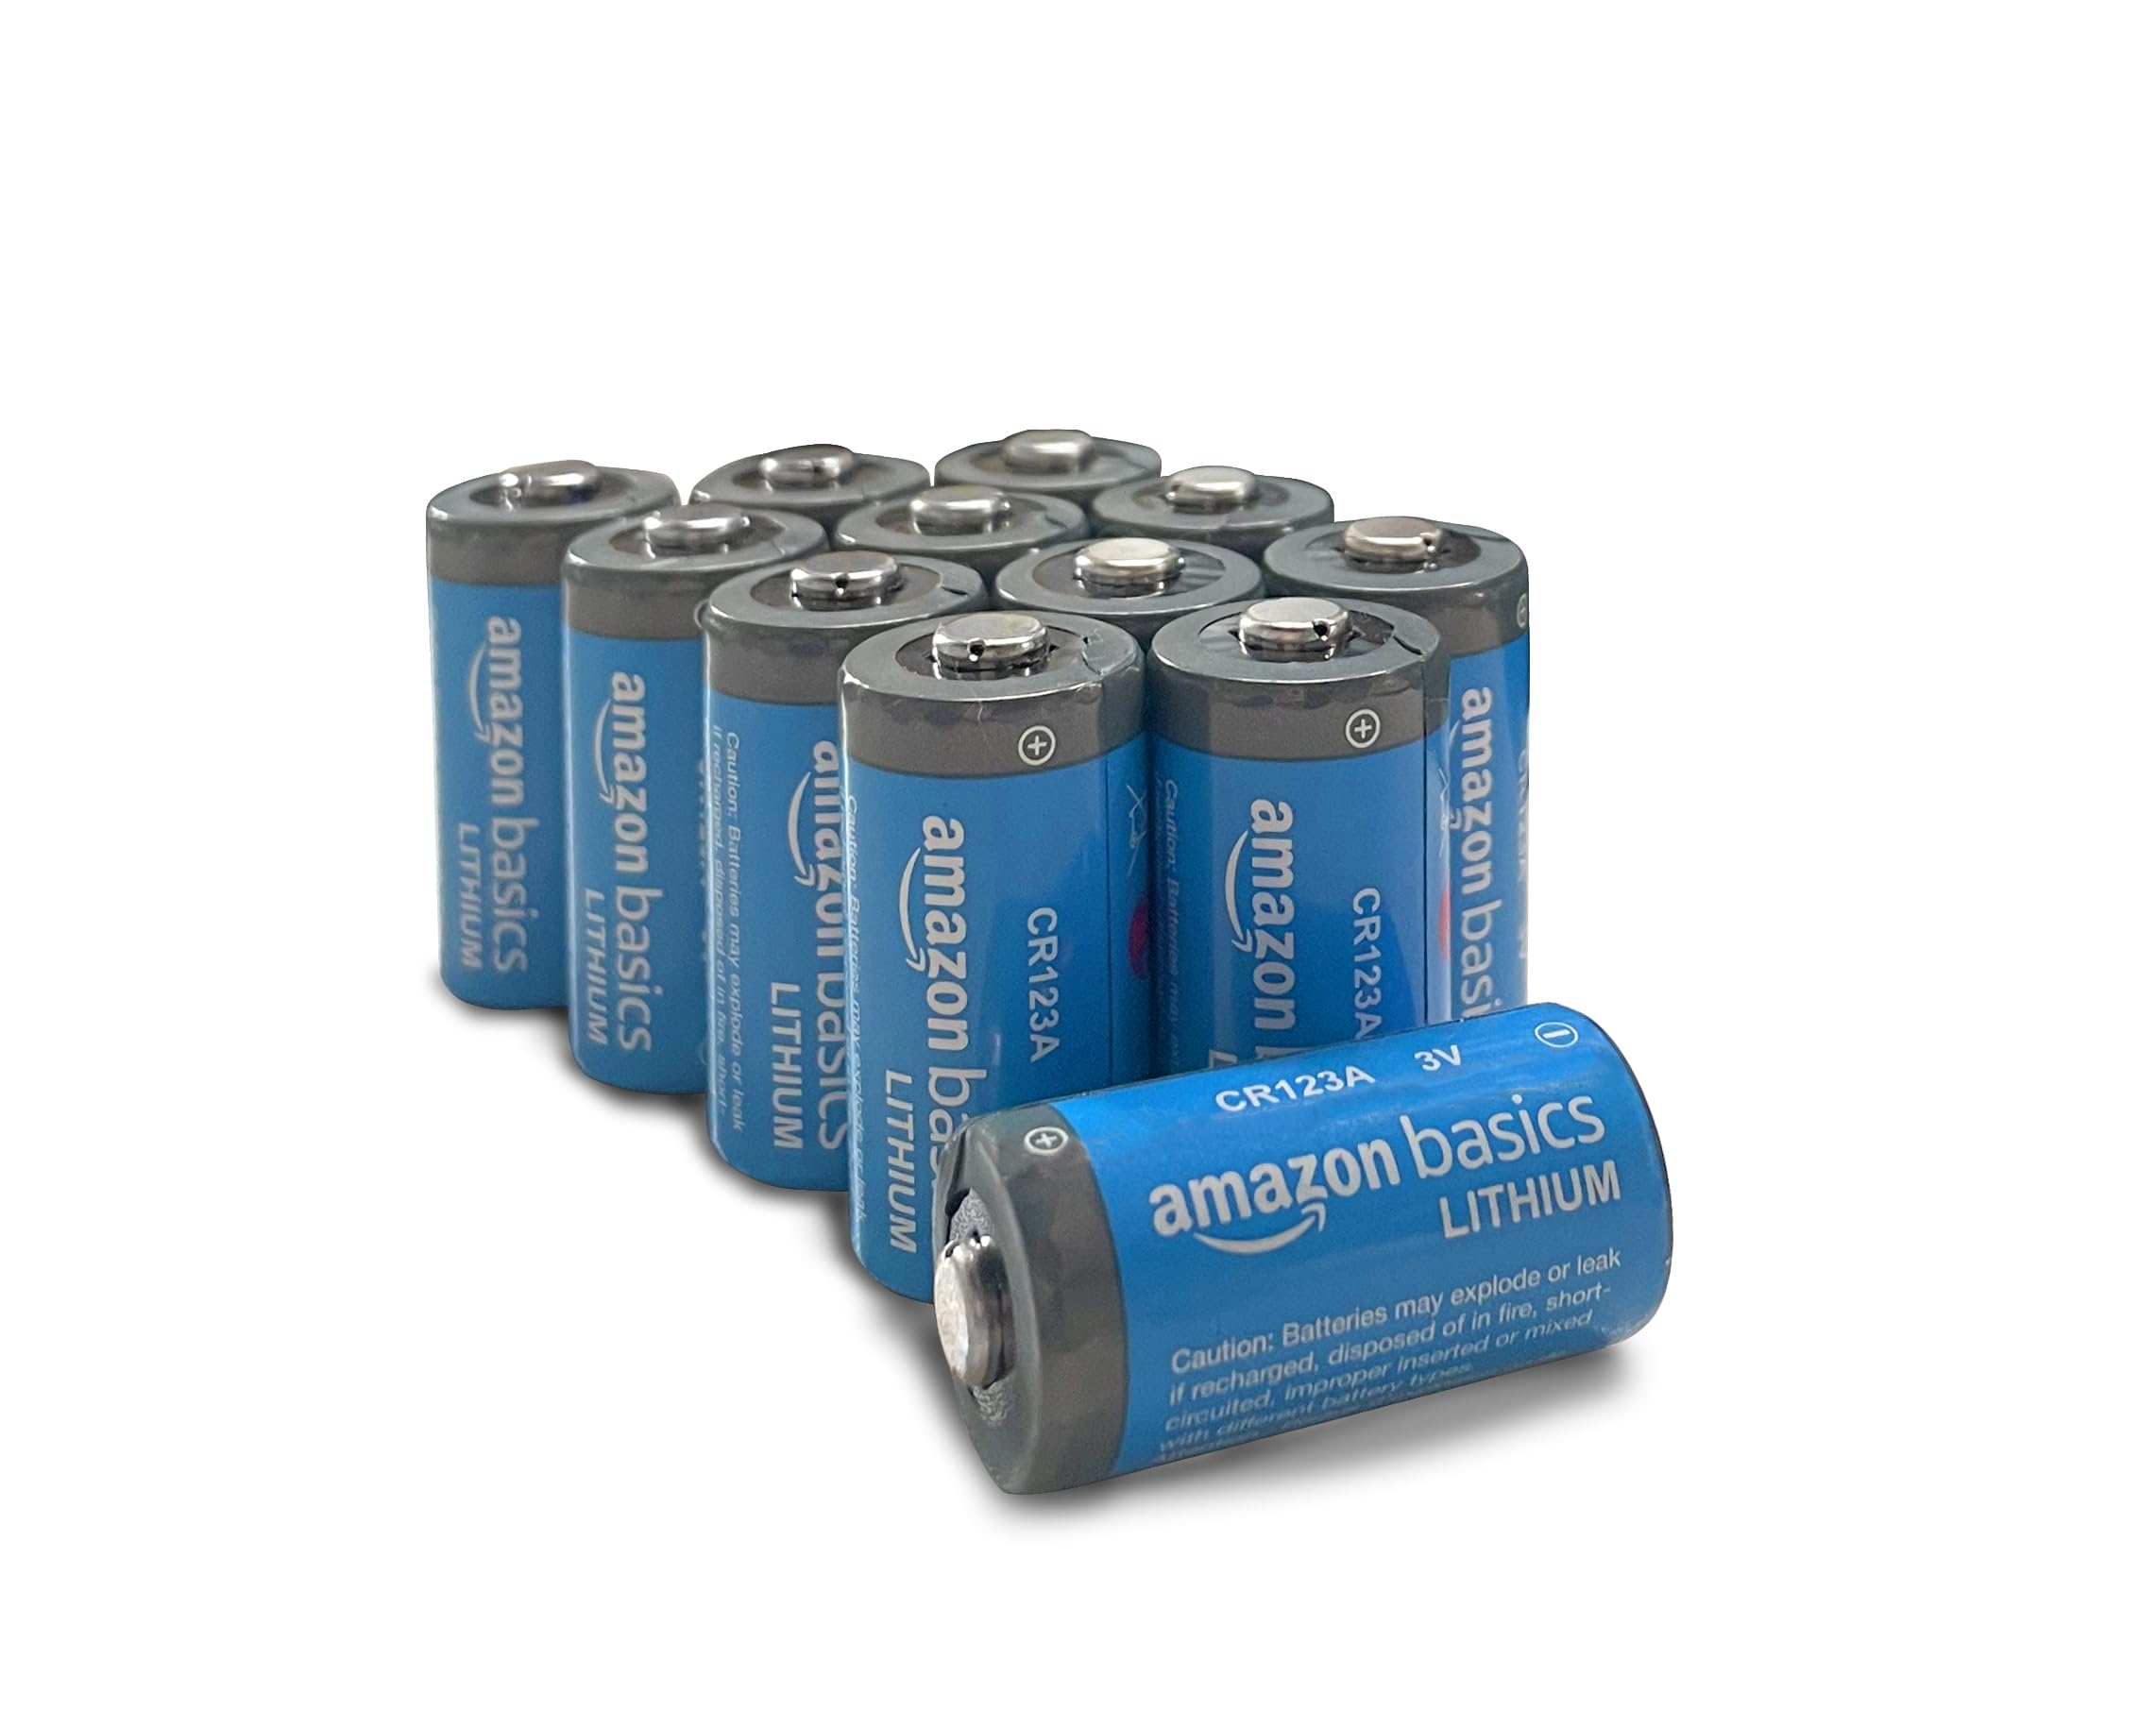 Amazon Basics 12-Pack CR123A Lithium Batteries, 3 Volt, 10-Year Shelf Life